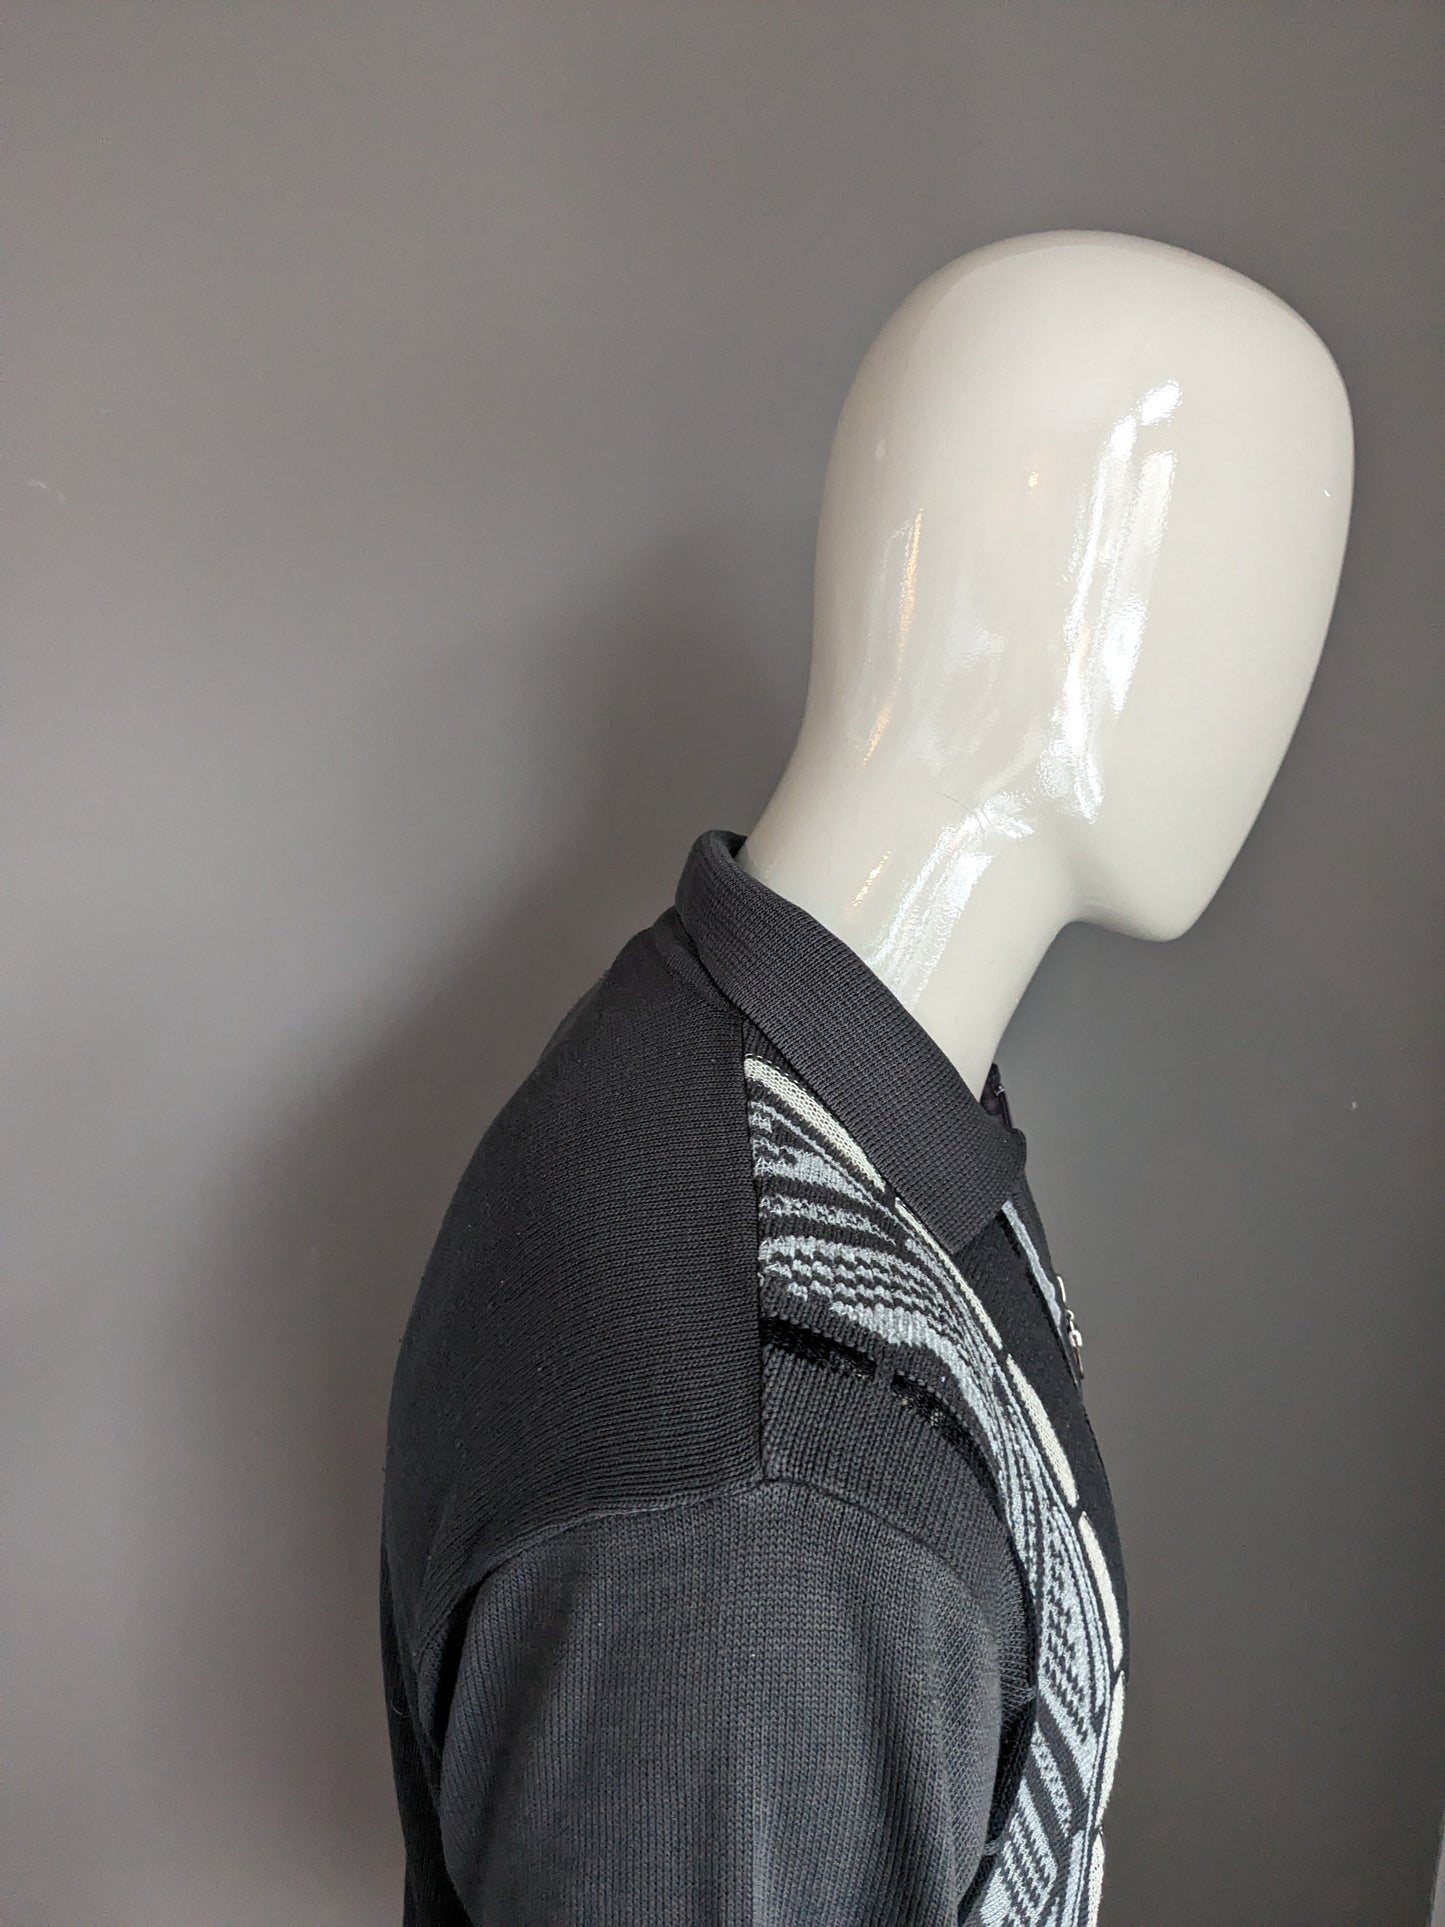 Vintage Sonne trui met rits. Grijs Beige Zwart gekleurd. Maat L.